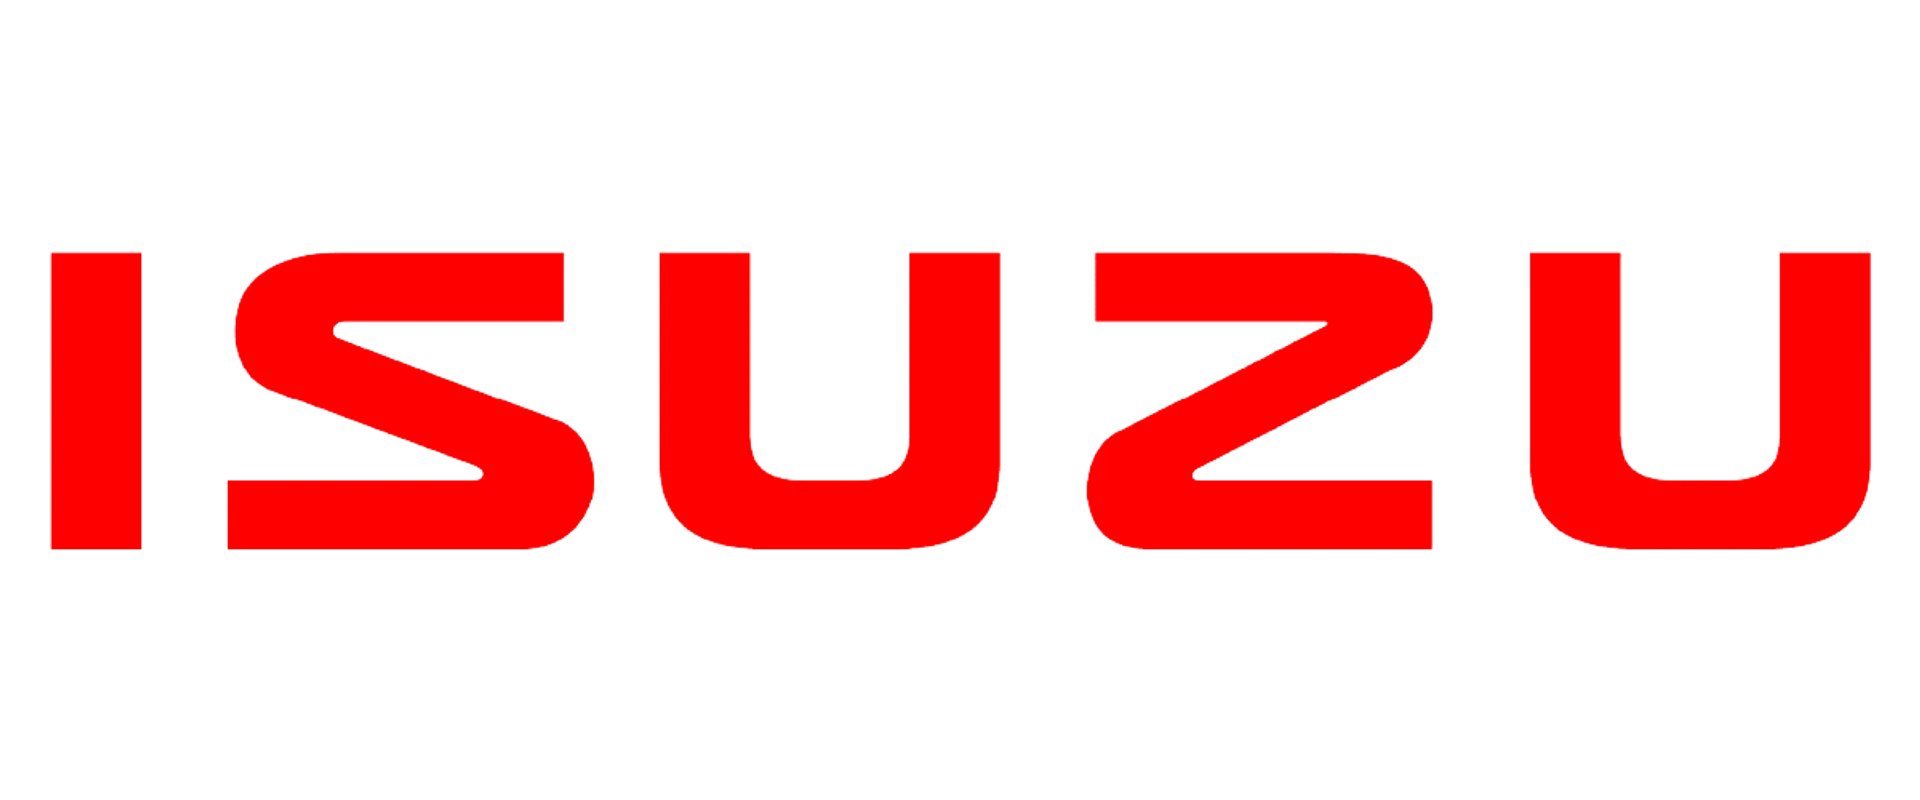 USUZU logo of current flyer